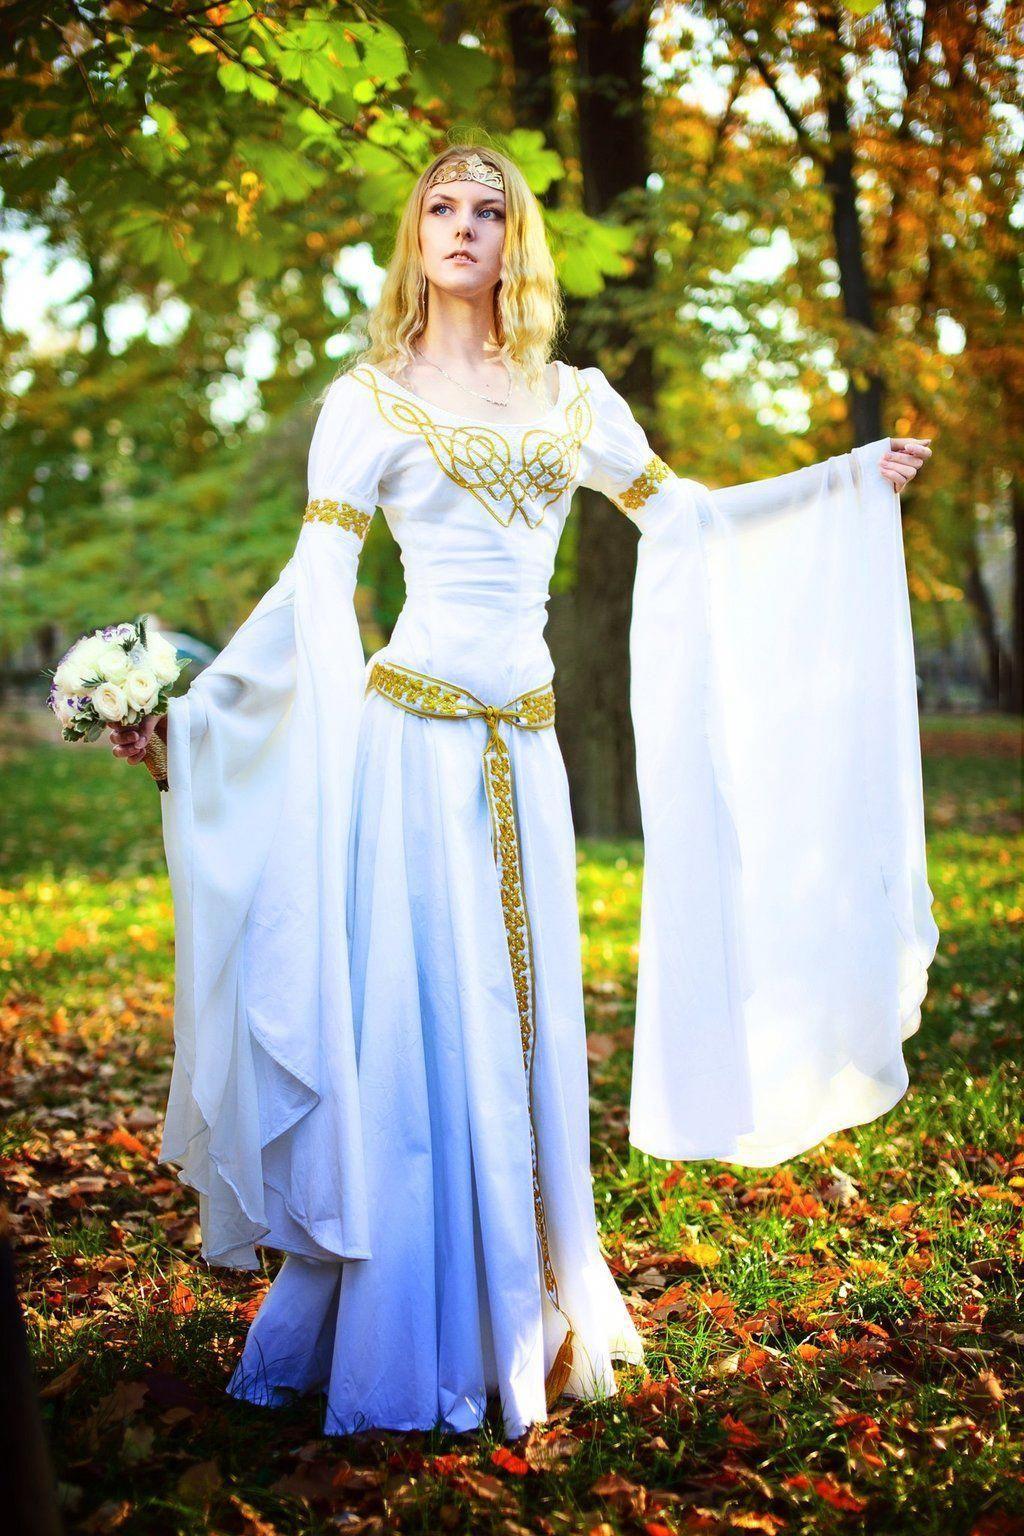 The Elven wedding dress